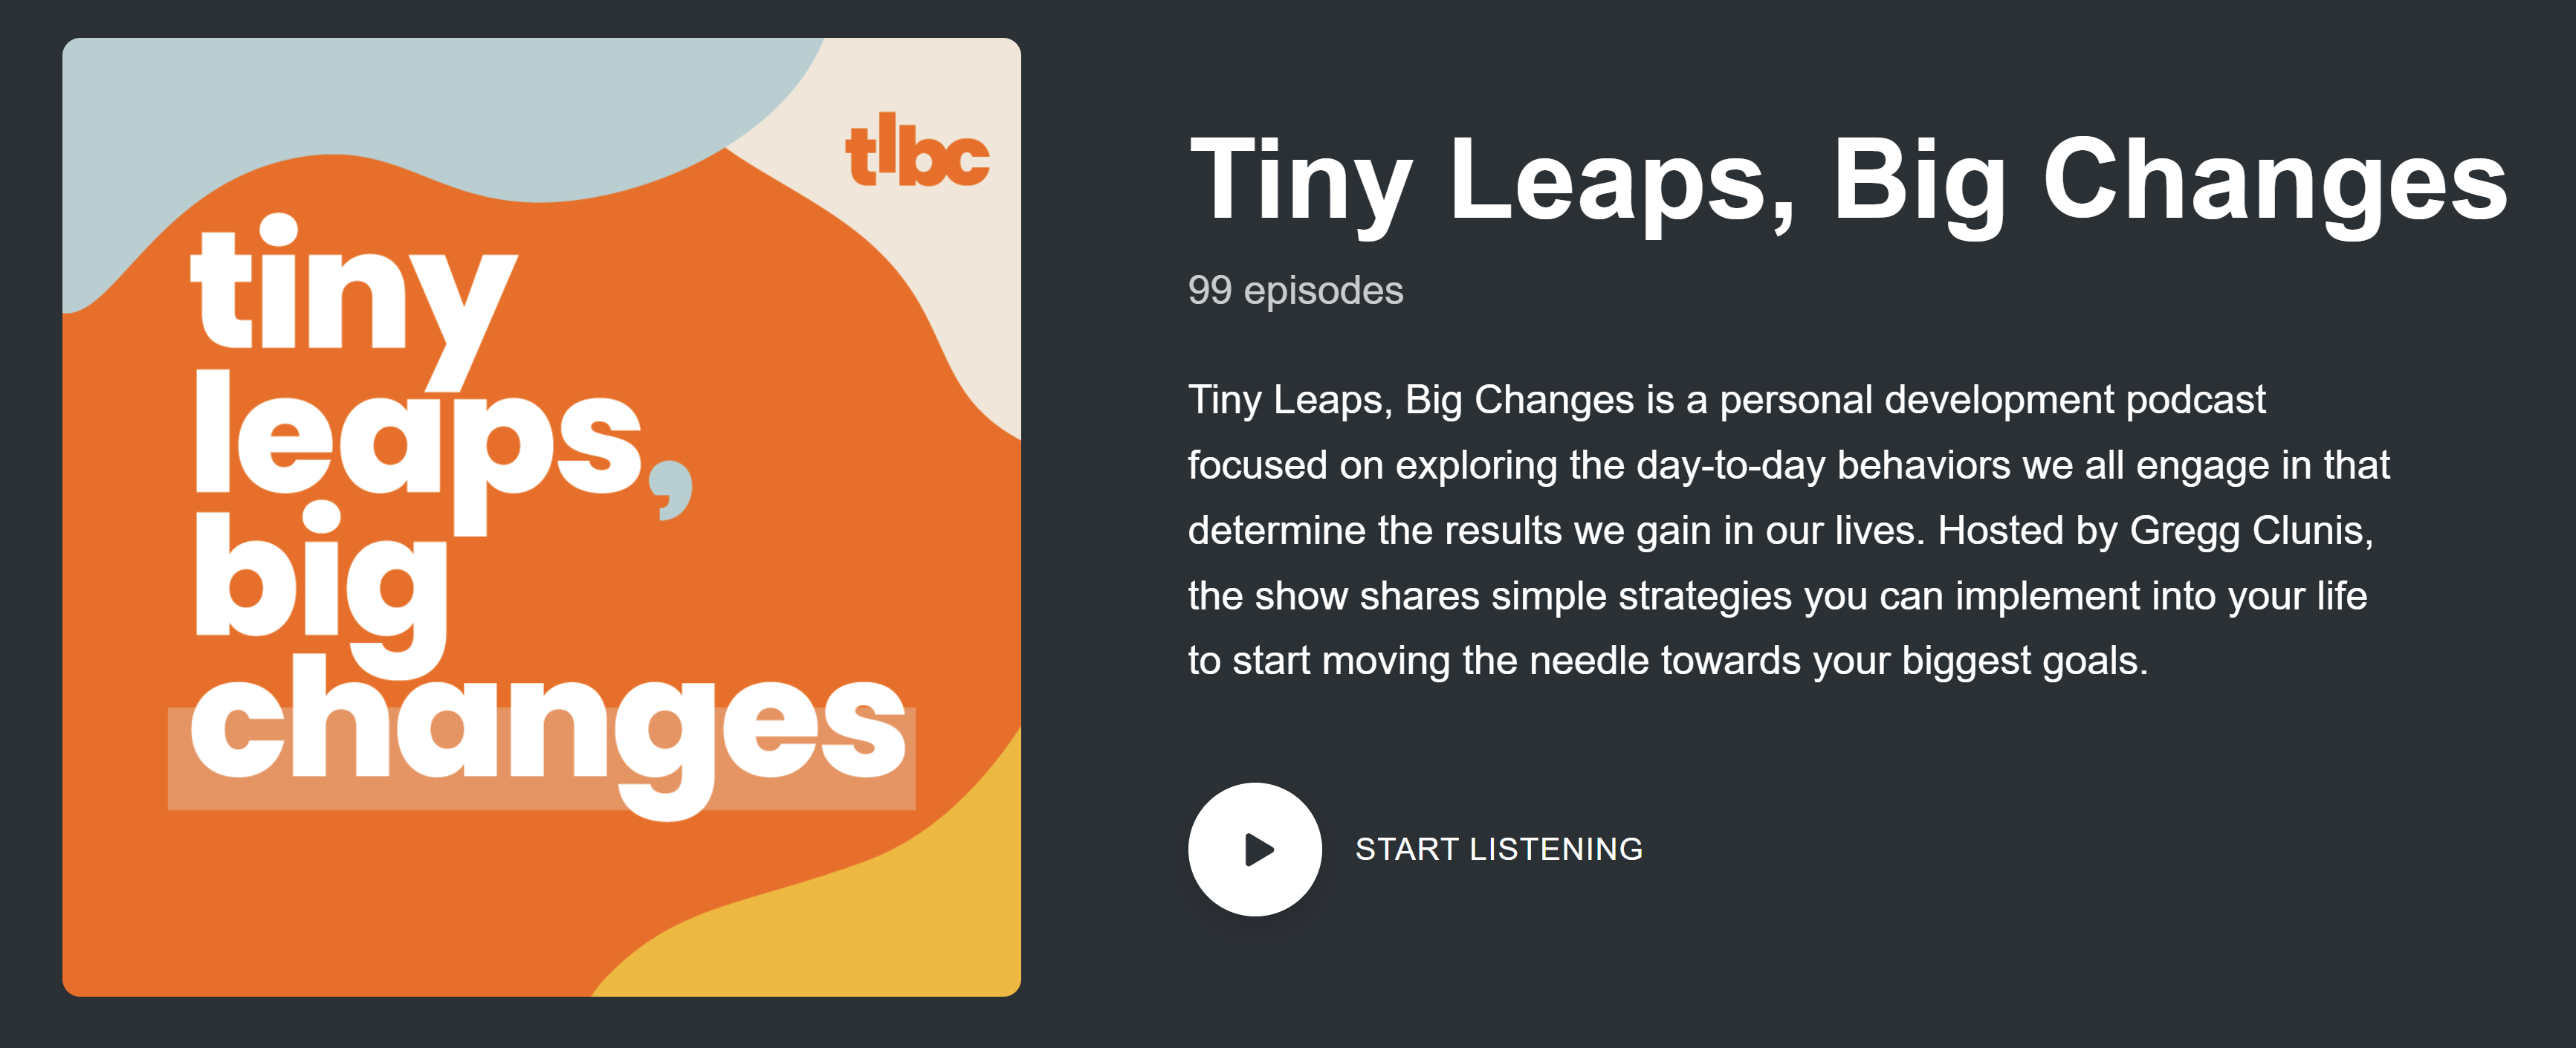 tiny leaps big changes